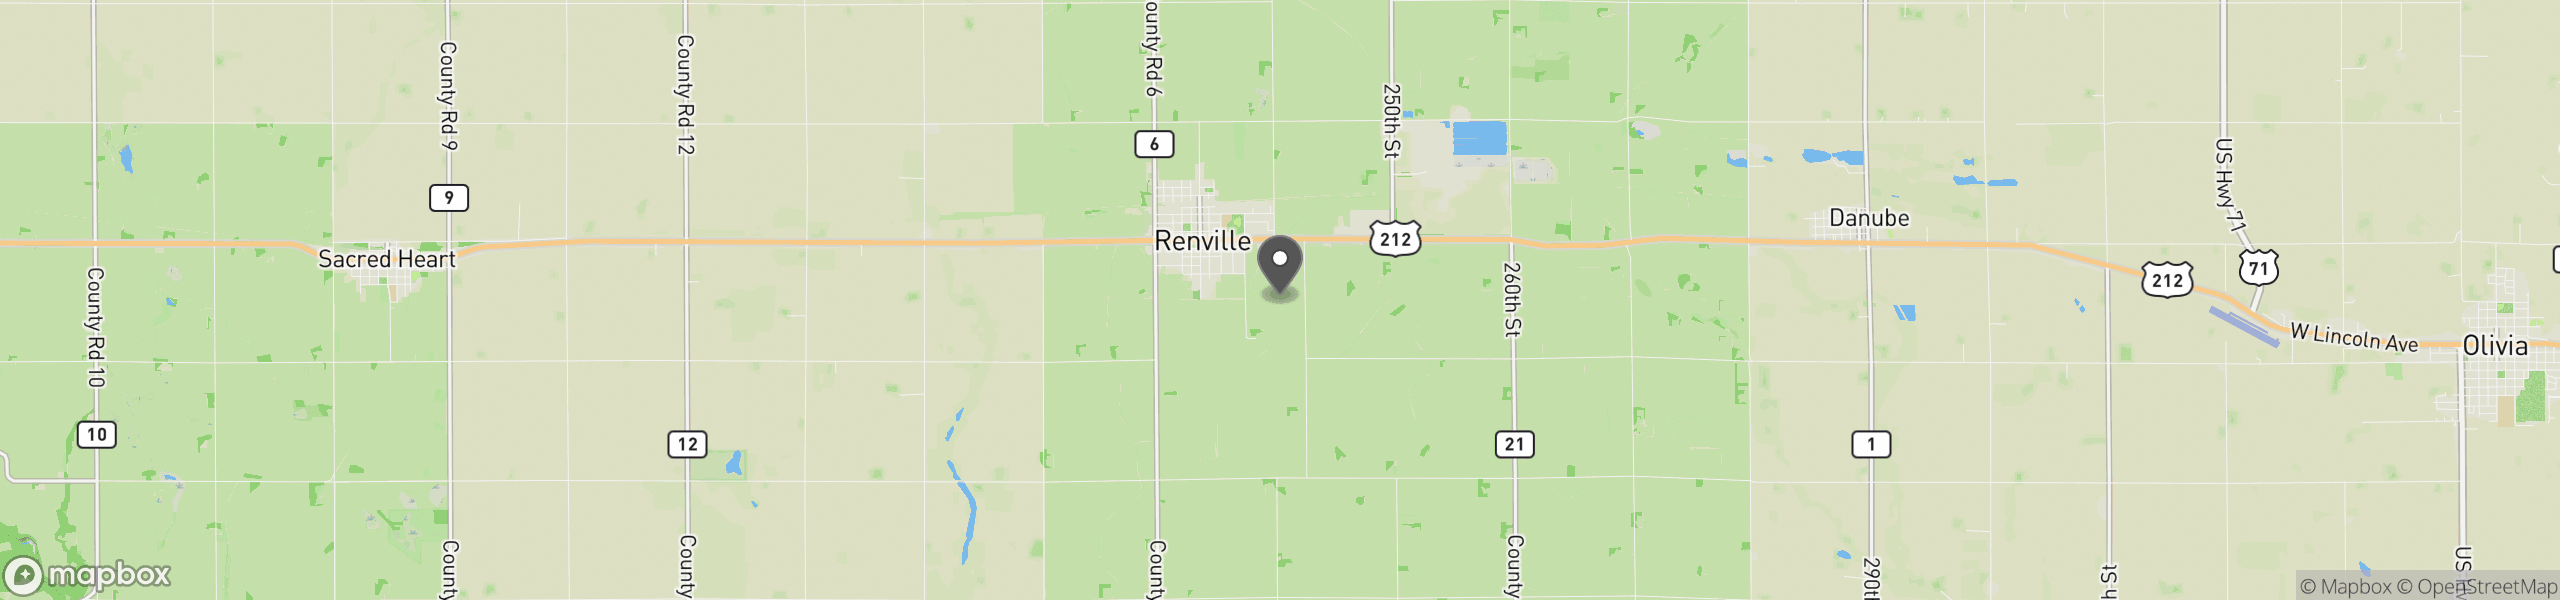 Renville, MN 56284